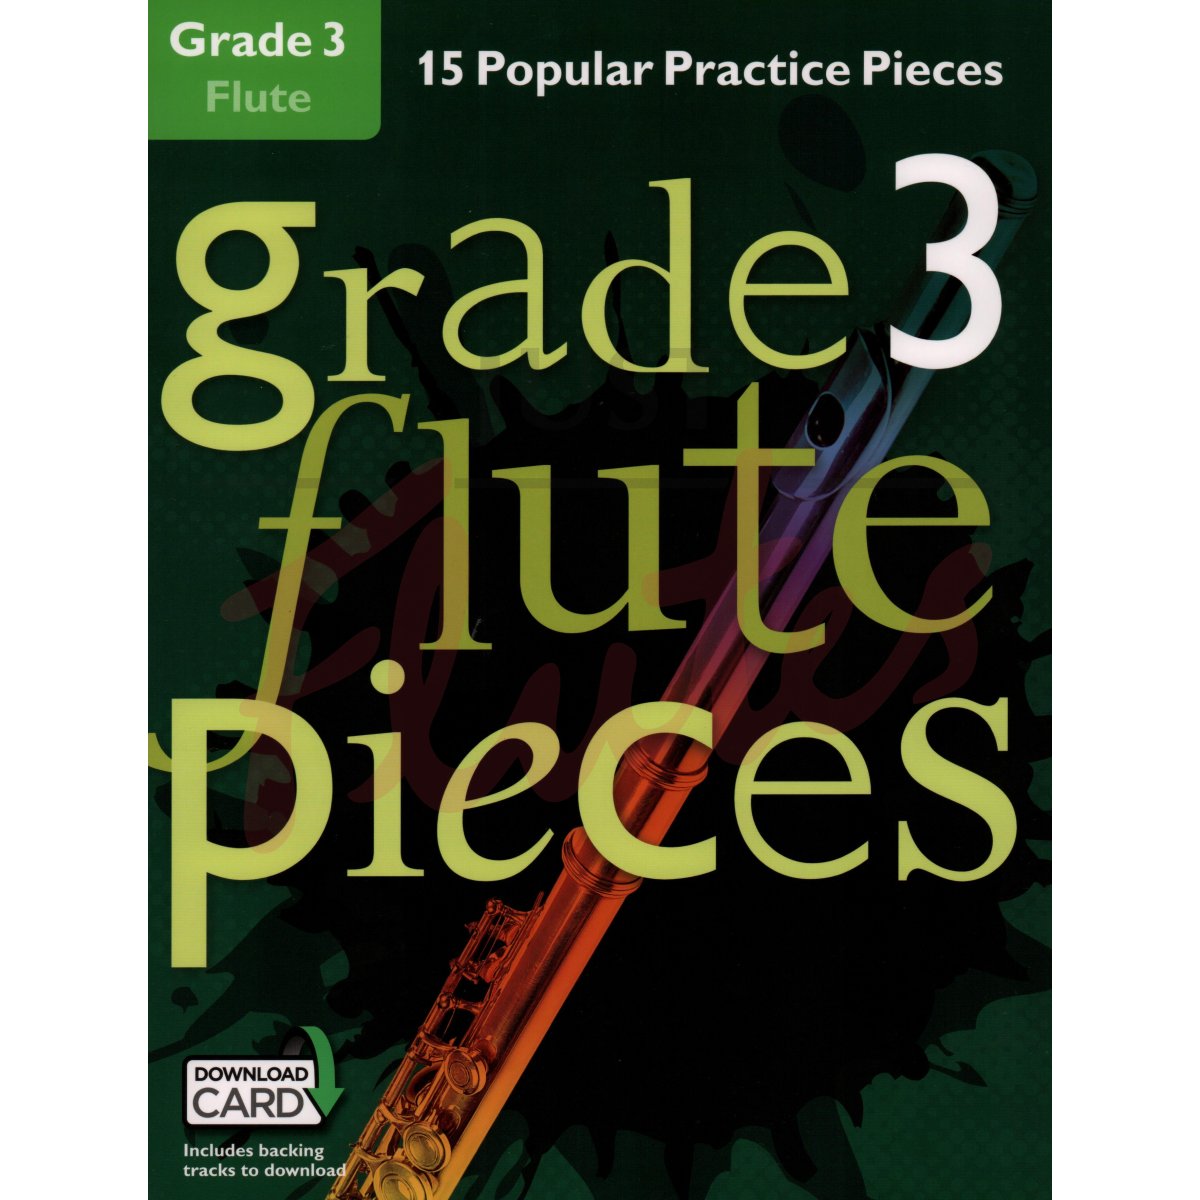 Grade 3 Flute Pieces - 15 Popular Practice Pieces